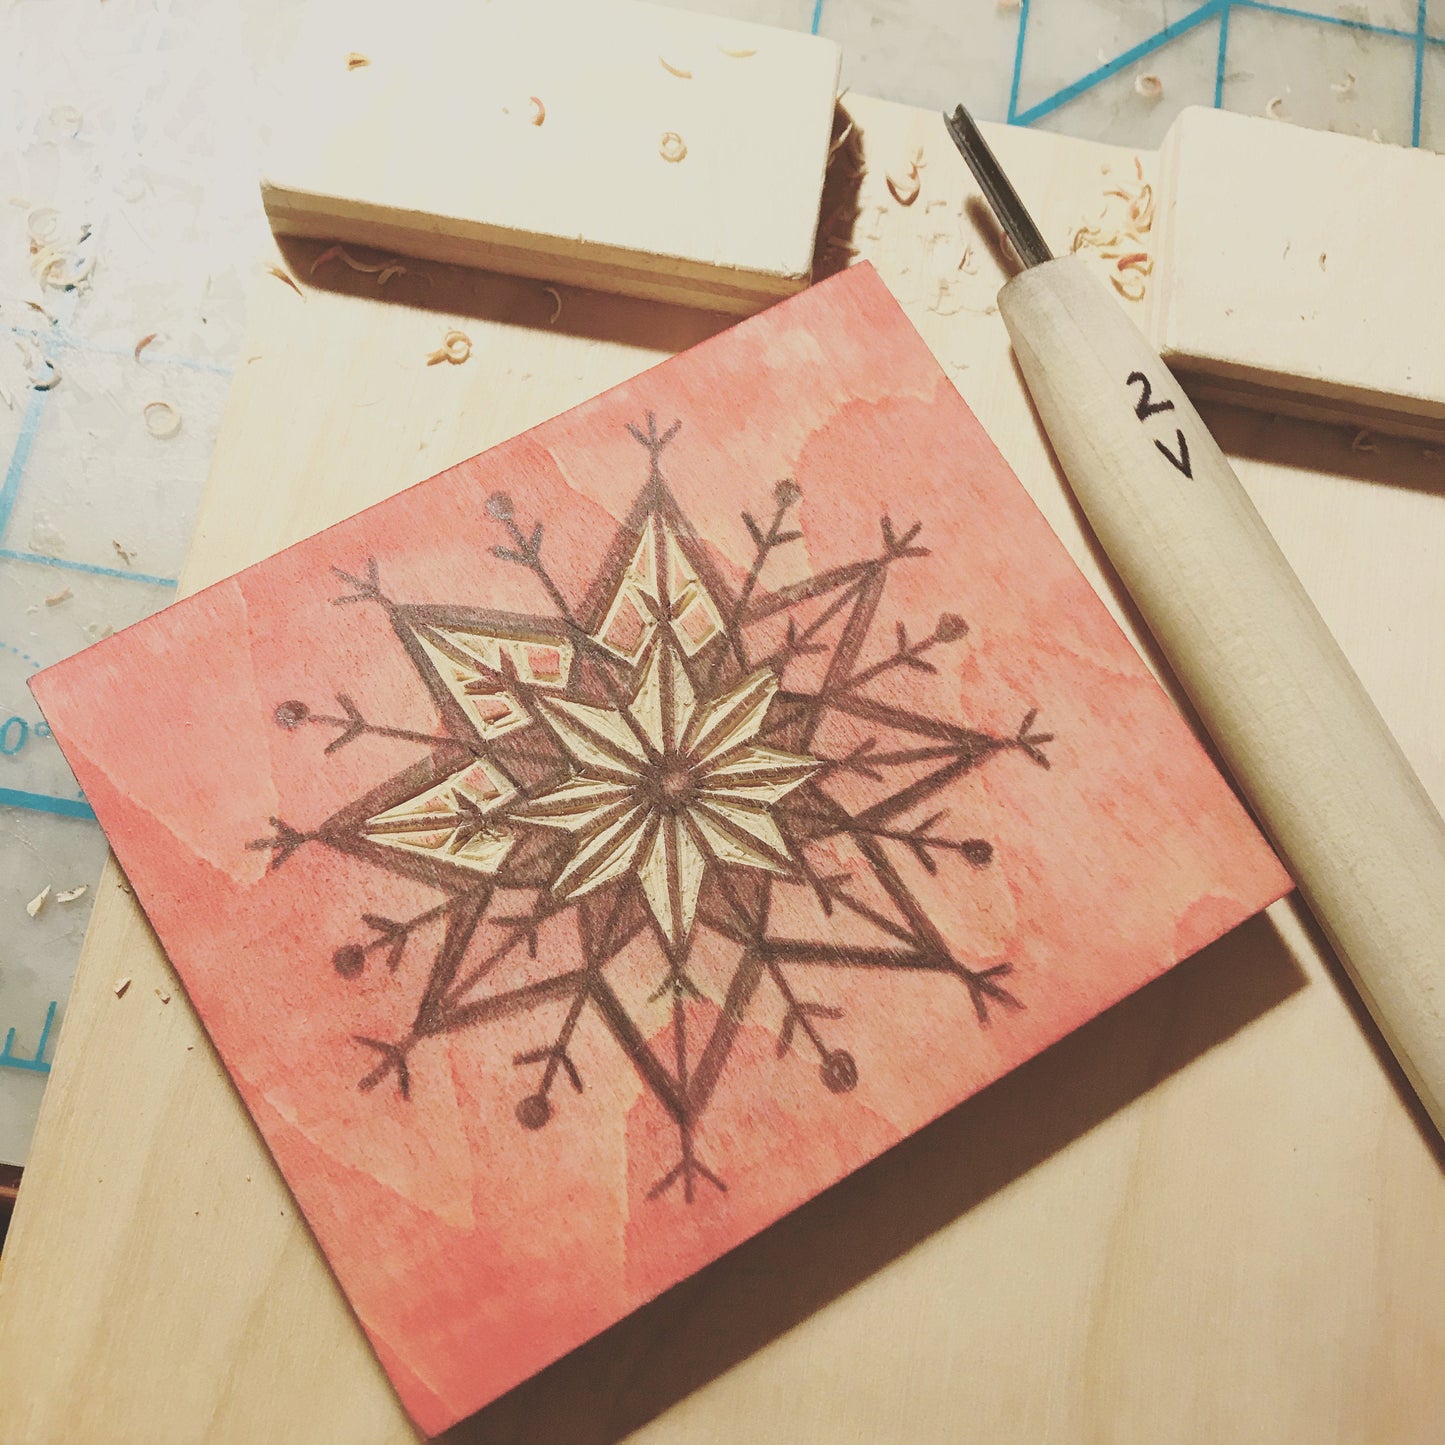 Snowflake red single card - woodblock printed